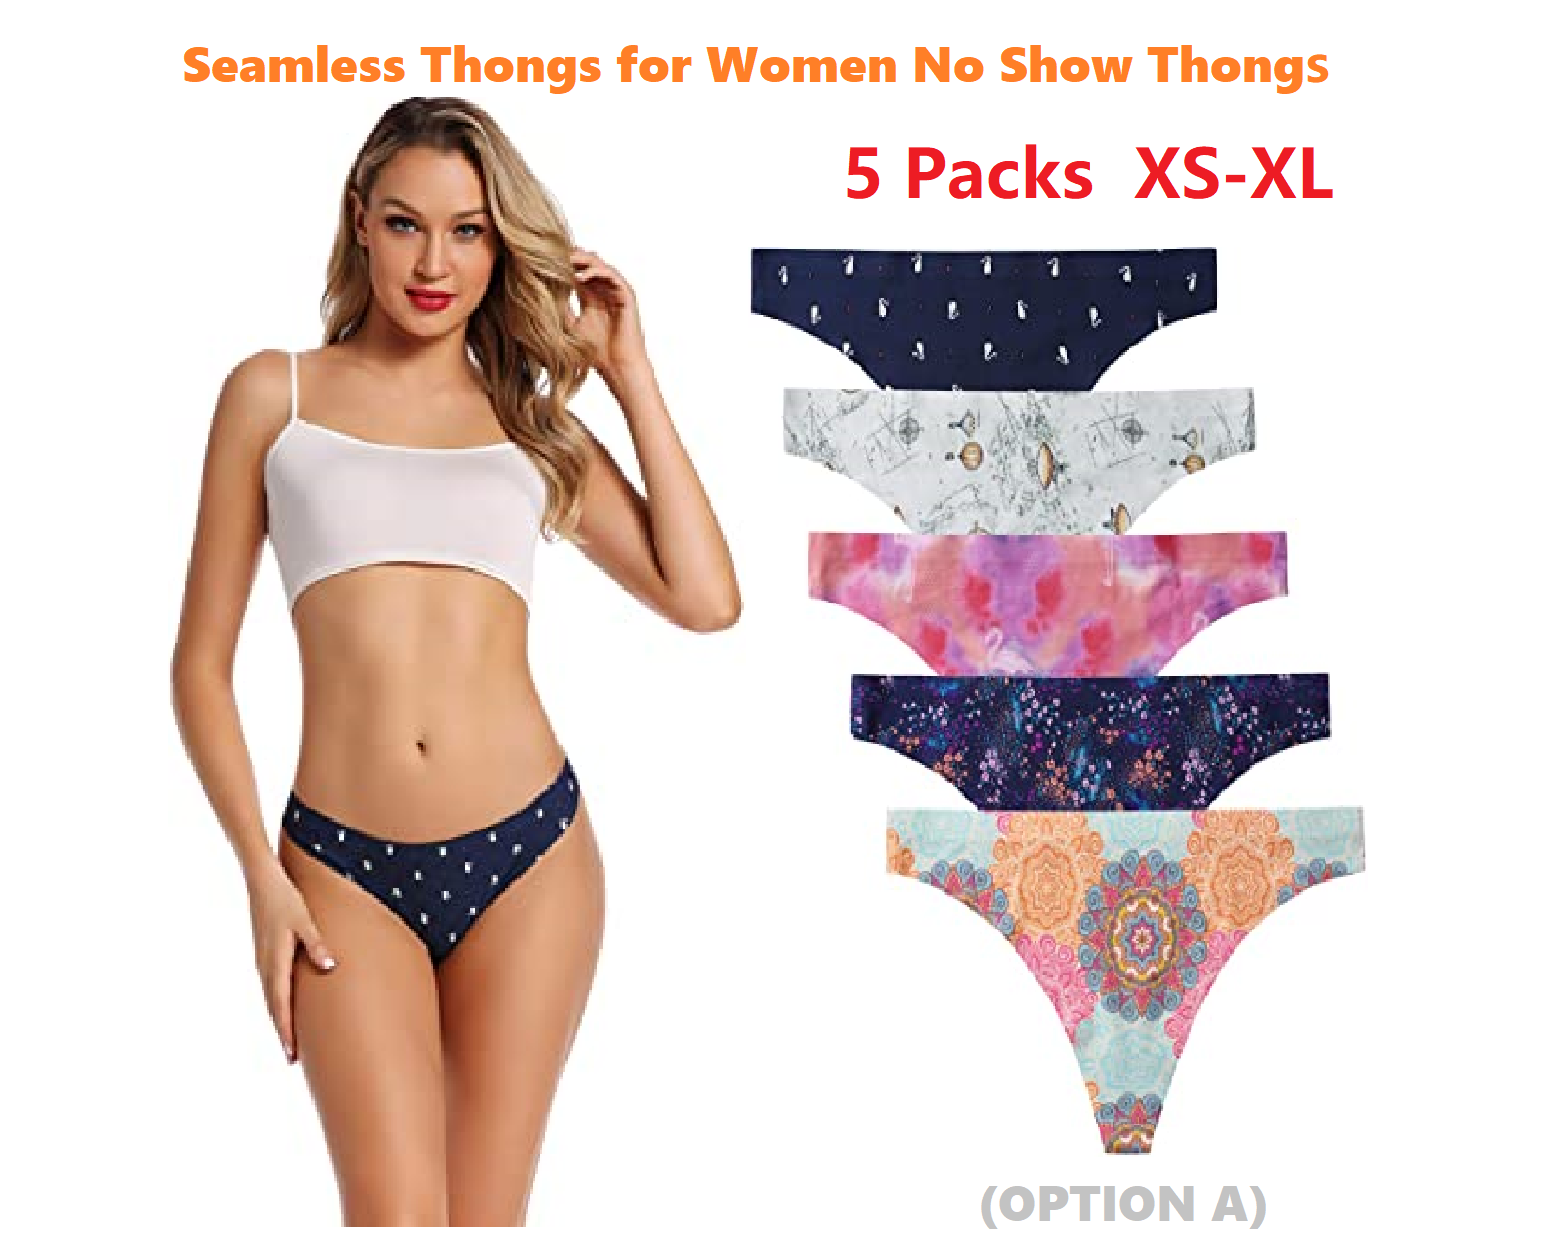 Bonivenshion Women's Seamless Thong NoShow Thong Underwear Packs